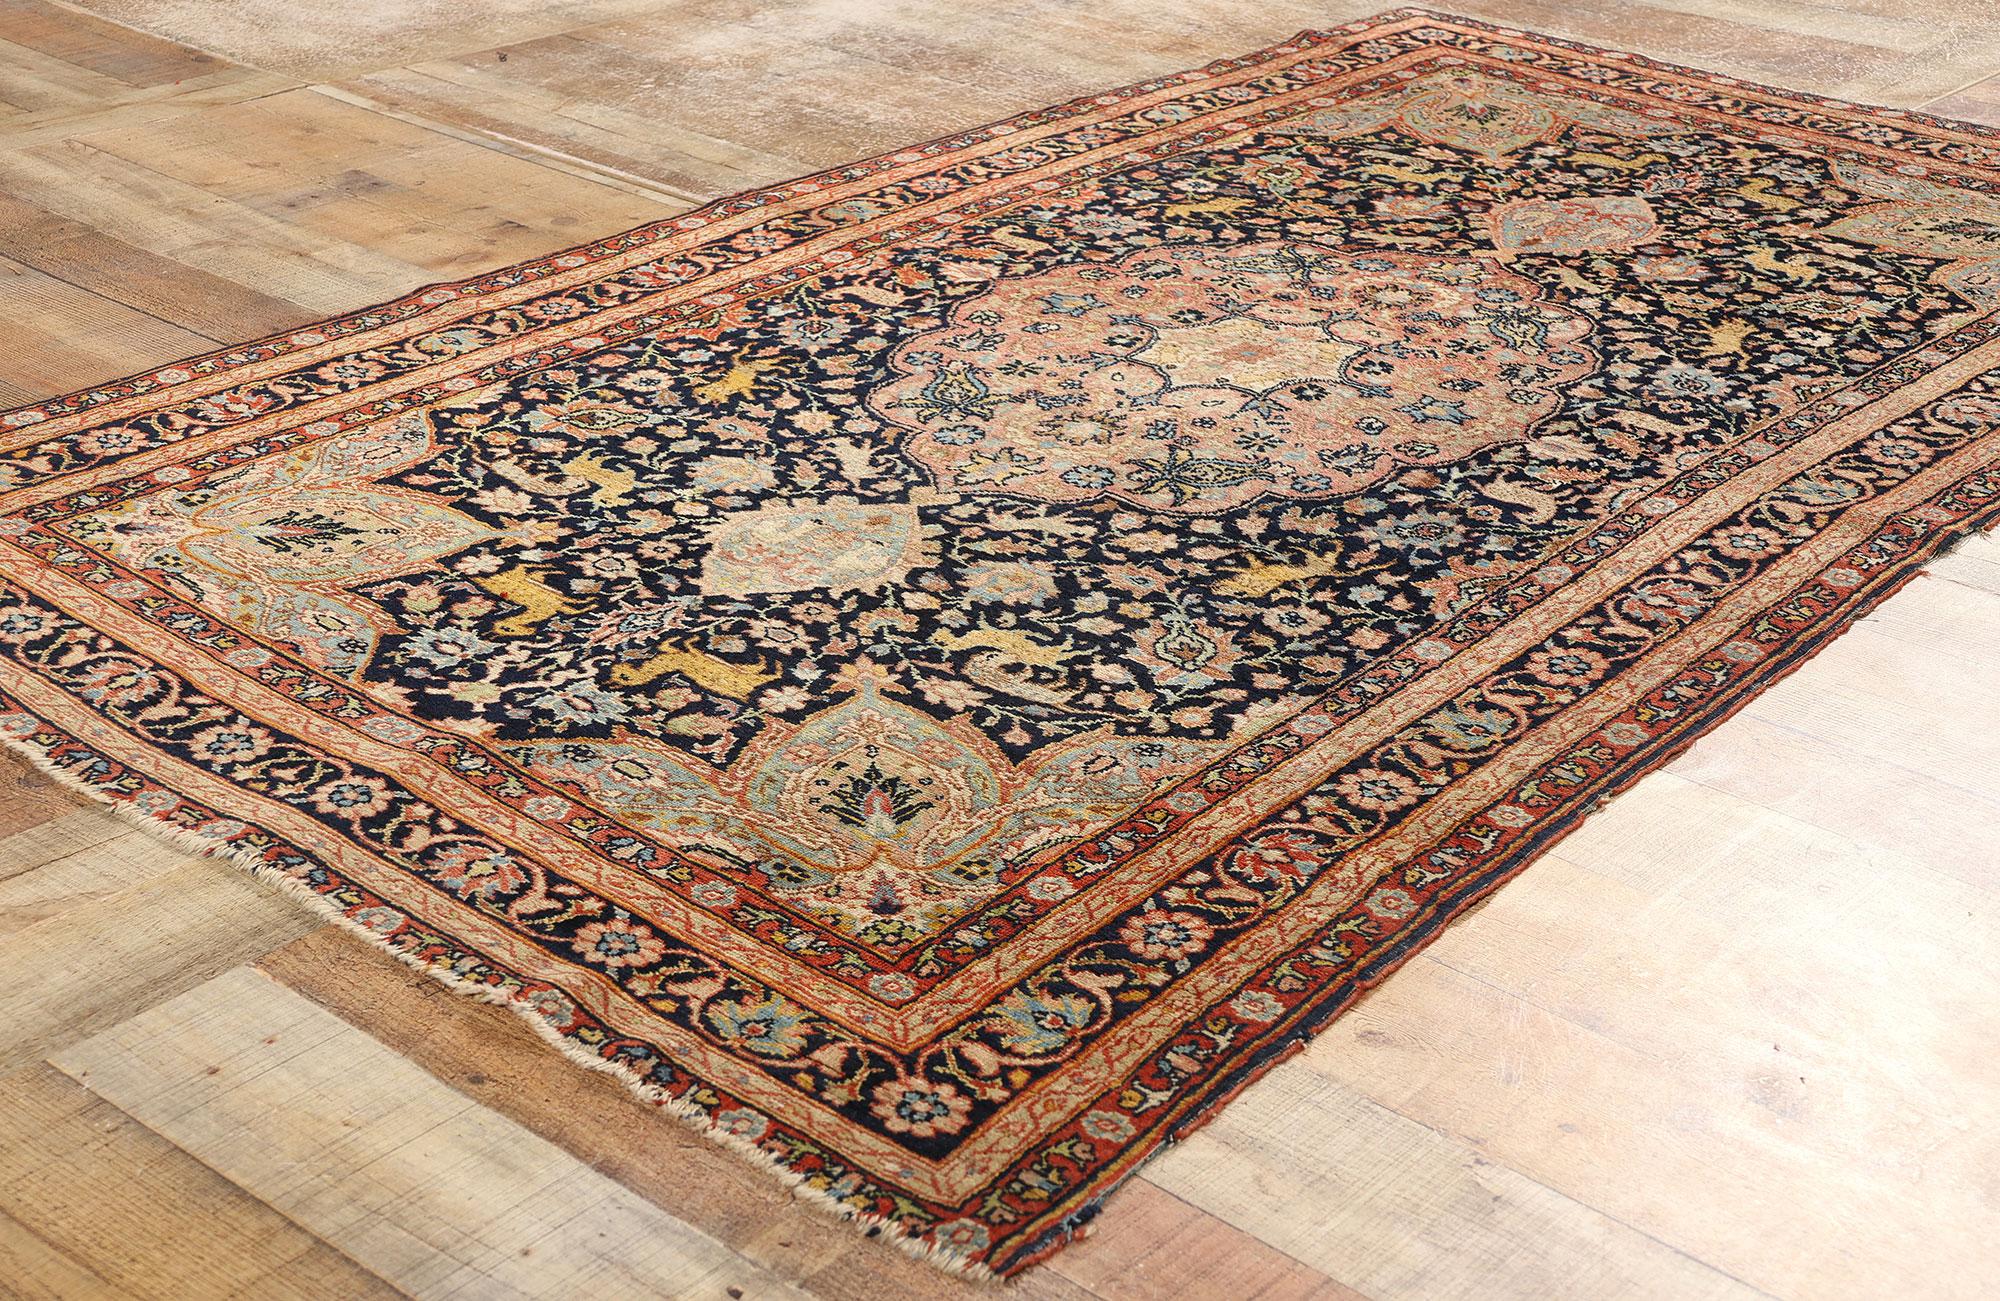 Safavid Medallion and Animal Persian Tabriz Hunting Carpet For Sale 1